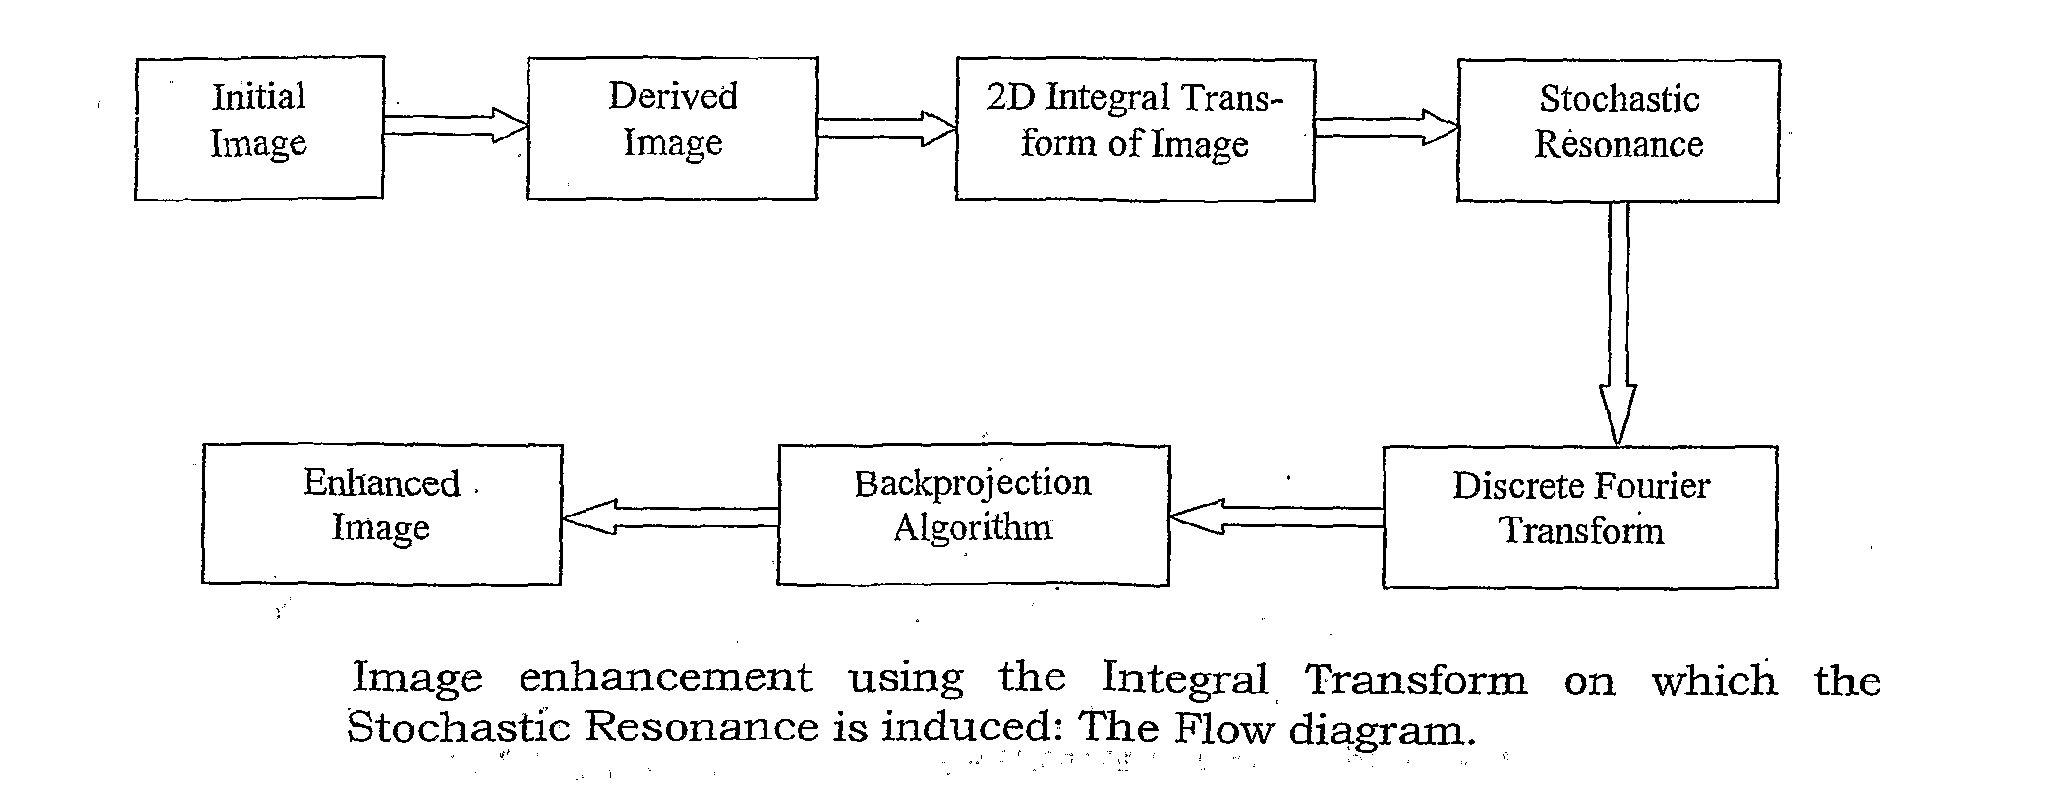 Medical Image Enhancement Technique Based on Image Transform Resonance